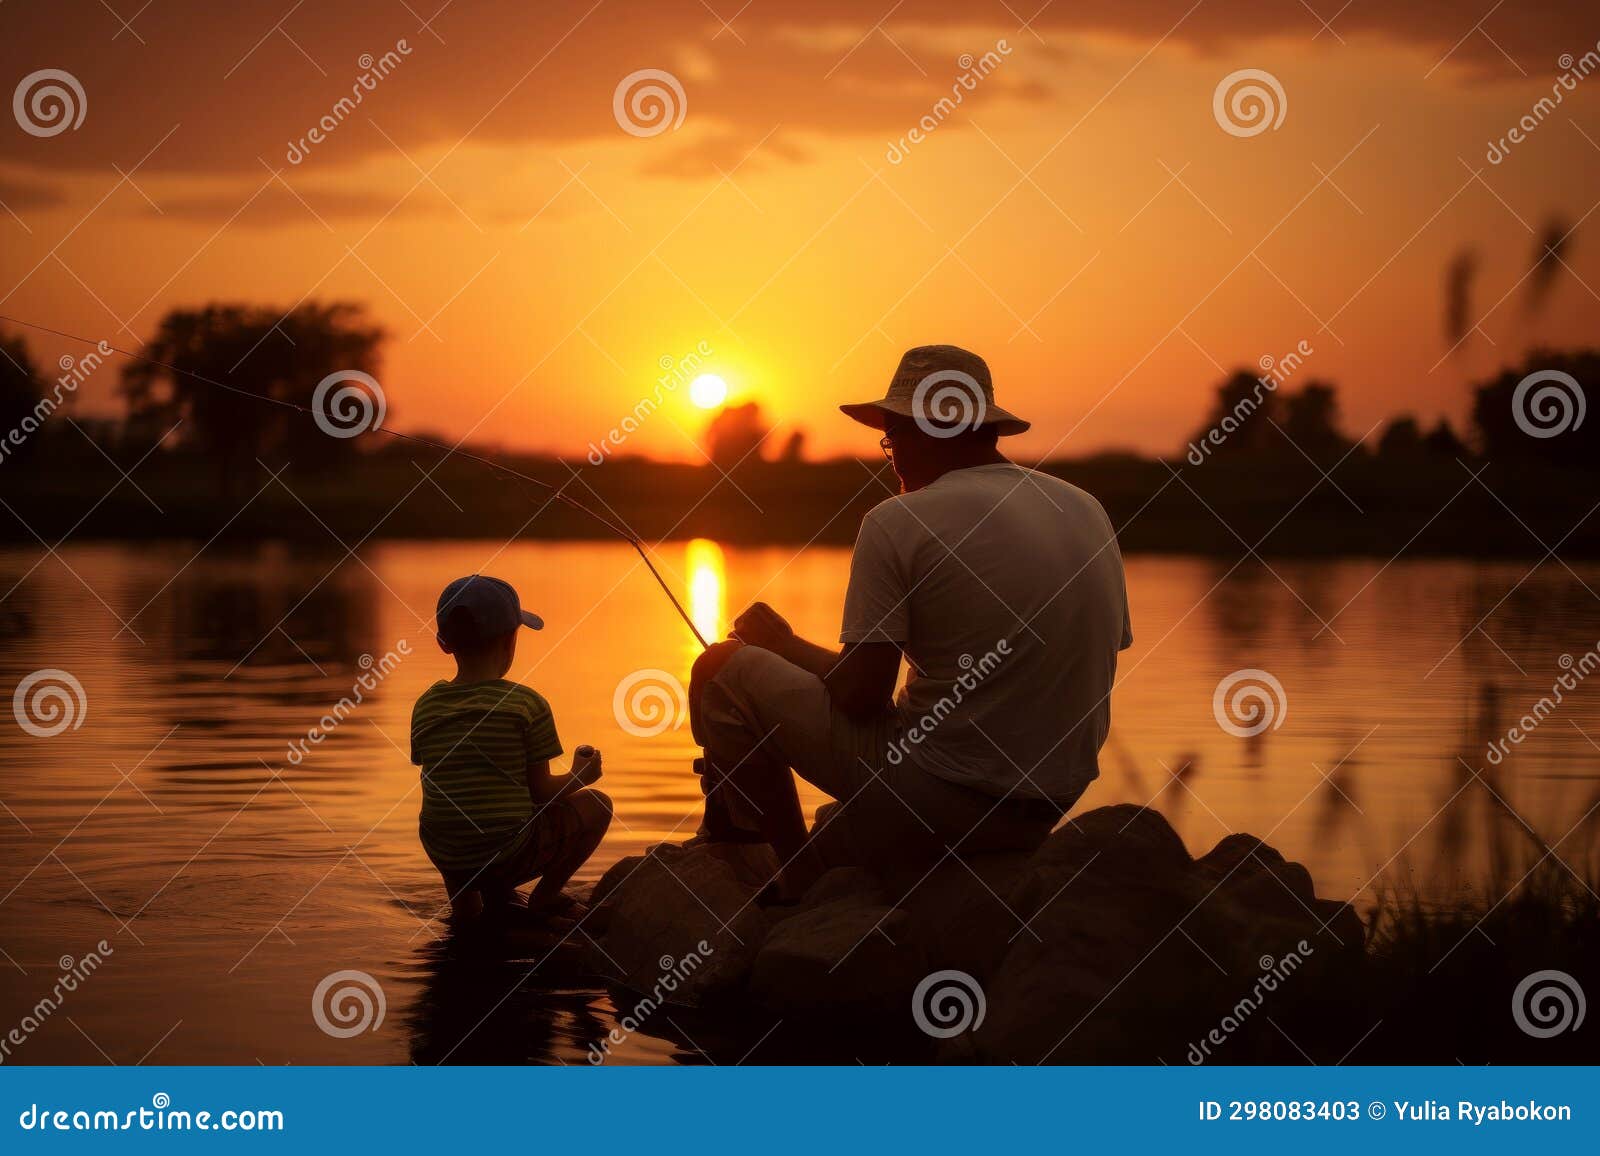 familial grandfather grandson fishing sunset. generate ai